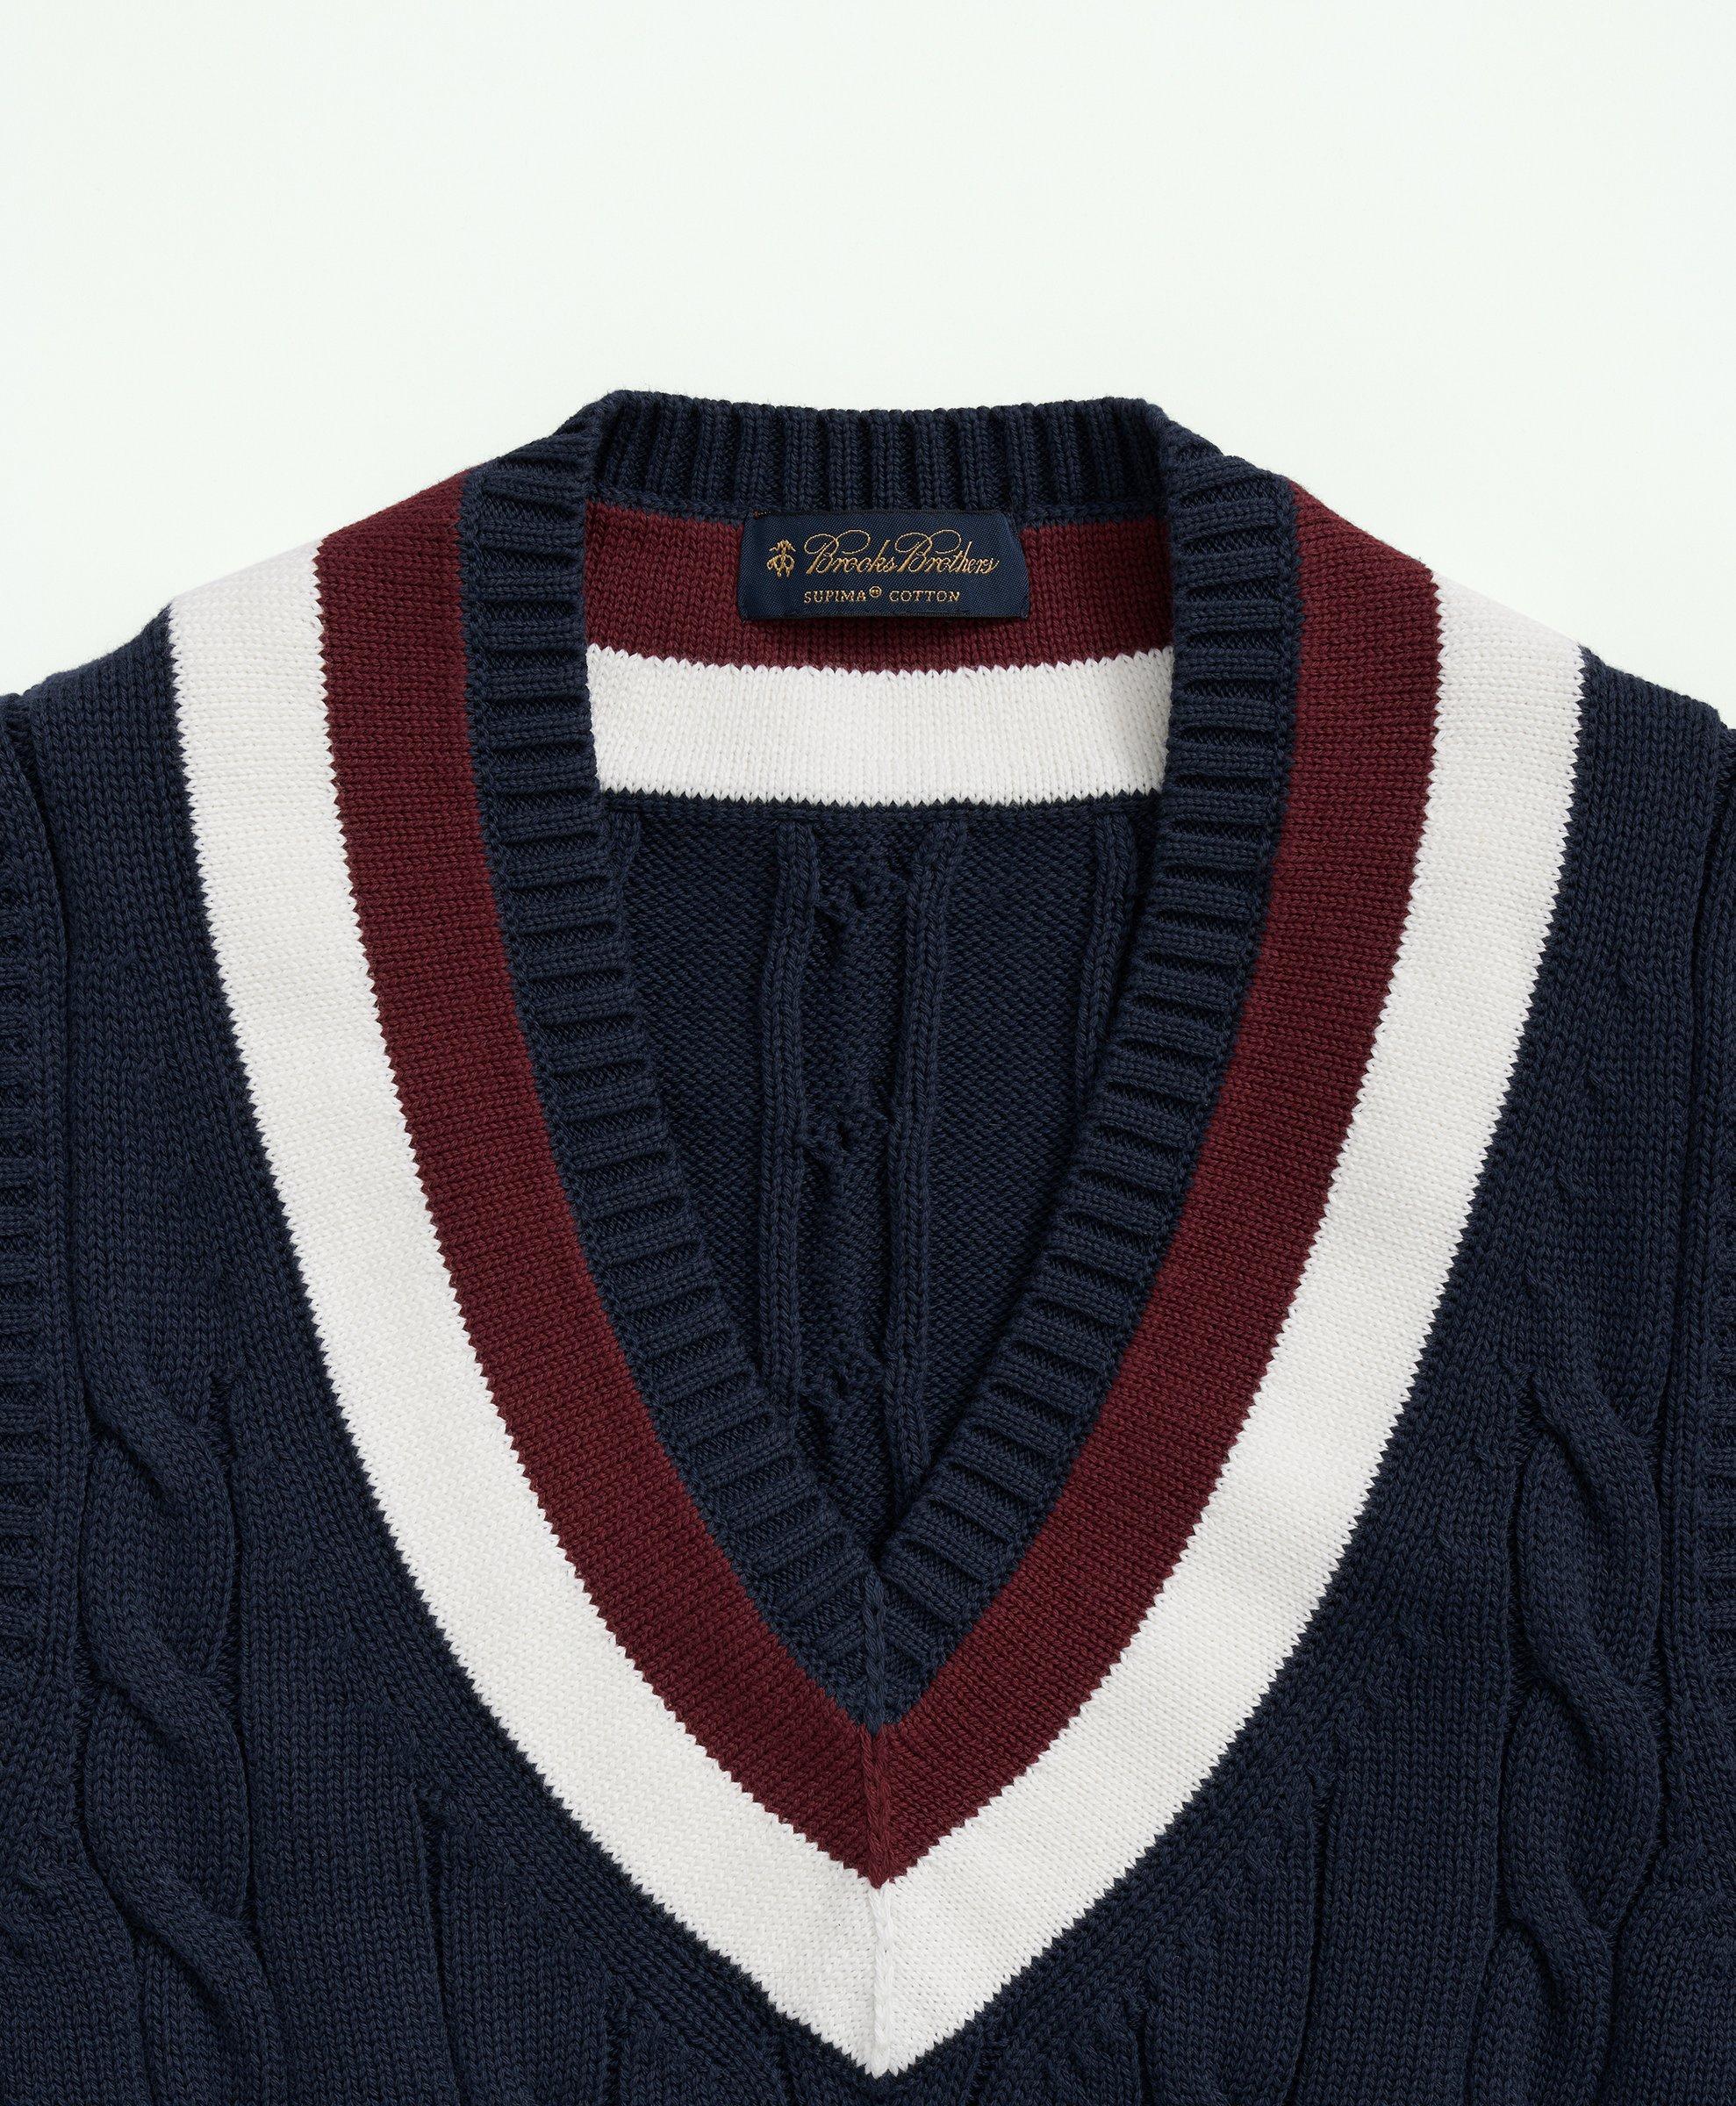 Vintage-Inspired Tennis V-Neck Vest in Supima® Cotton